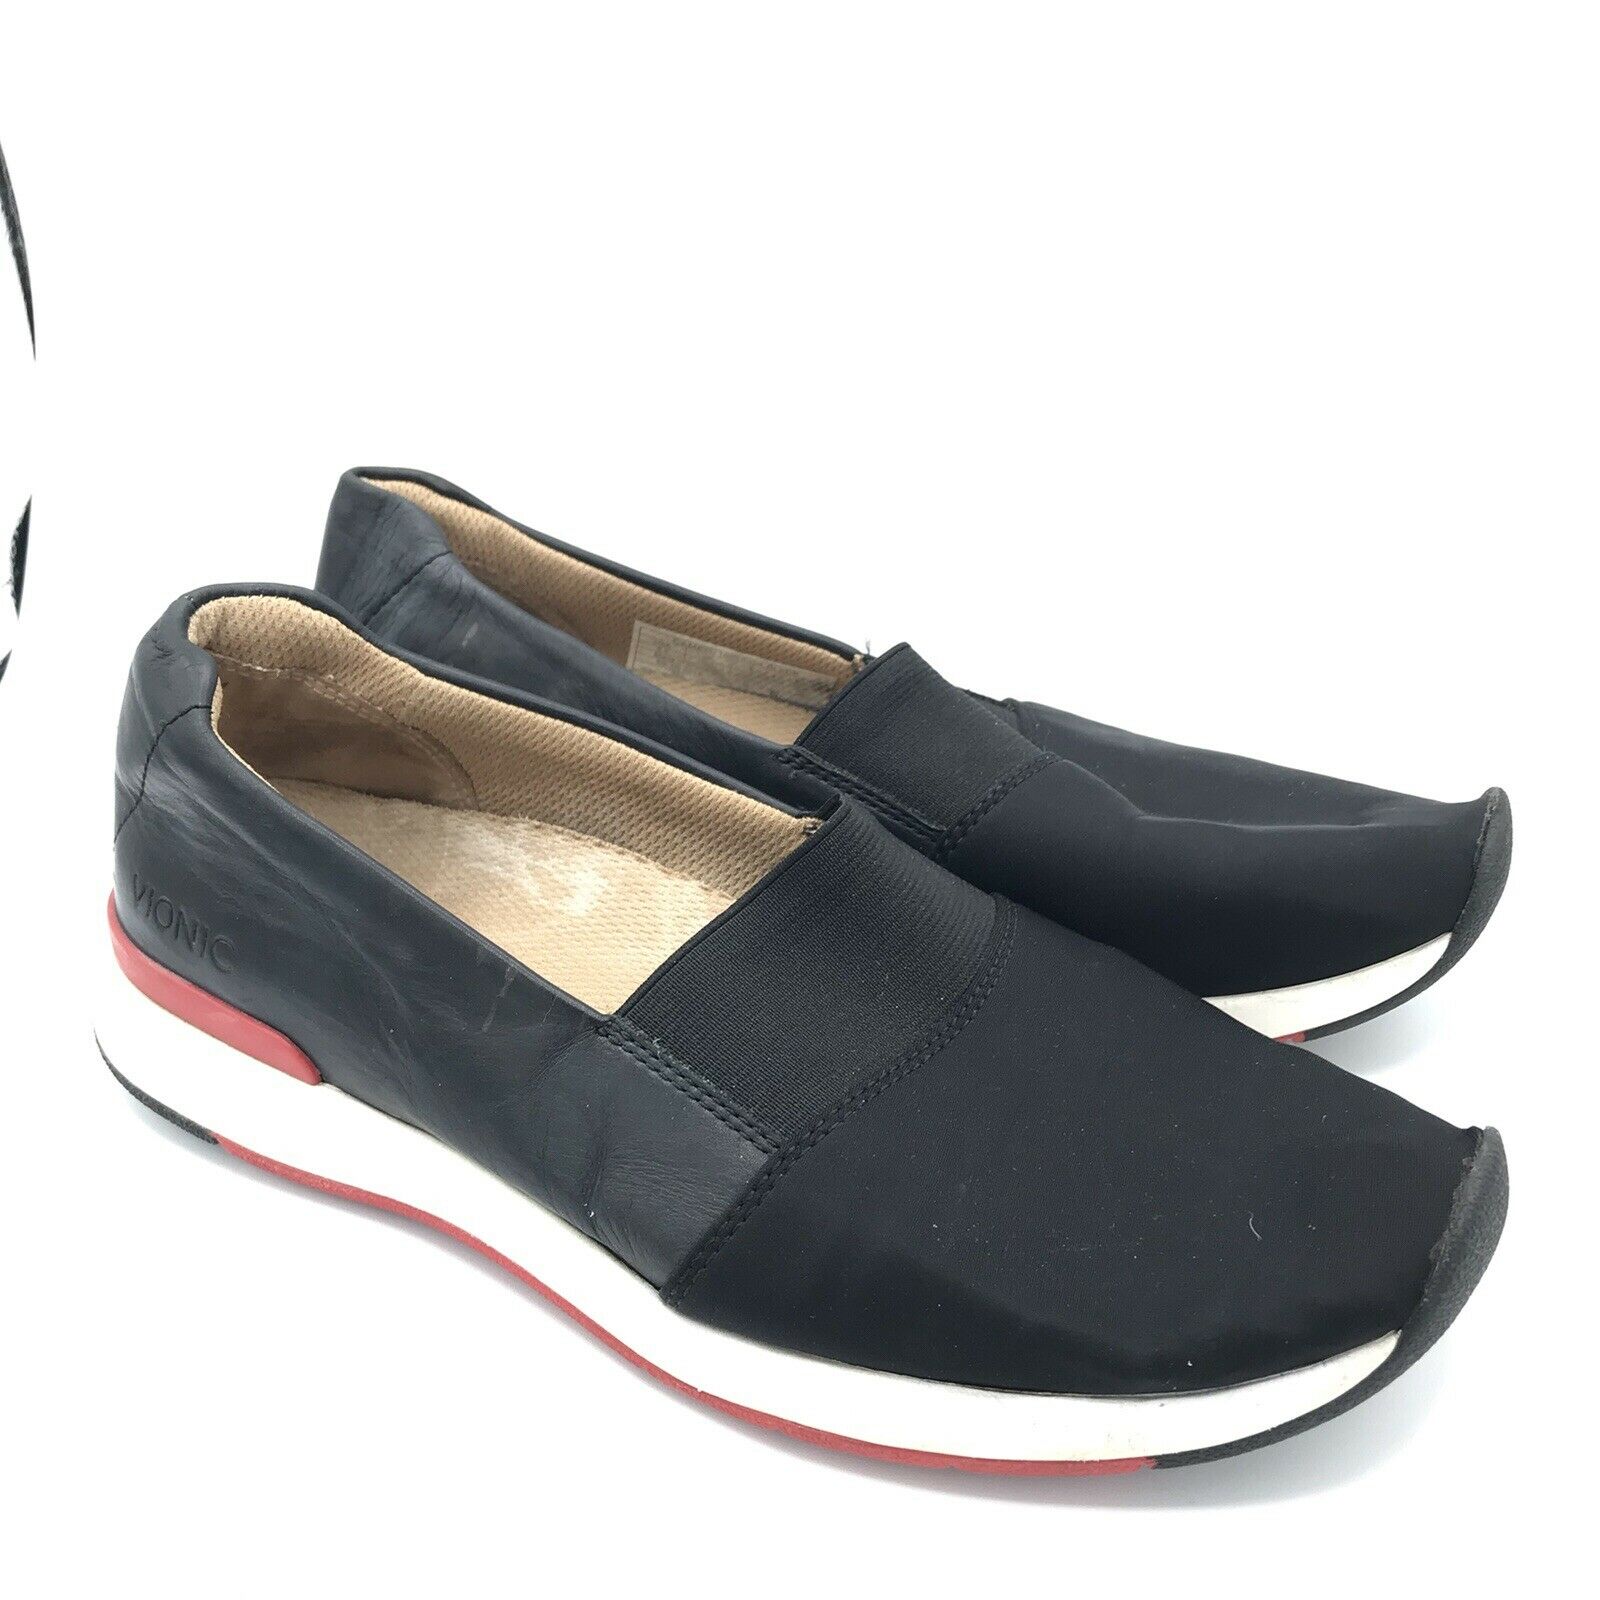 Vionic Cosmic Cameo Women’s Size 8.5 Casual Shoes Black GUC